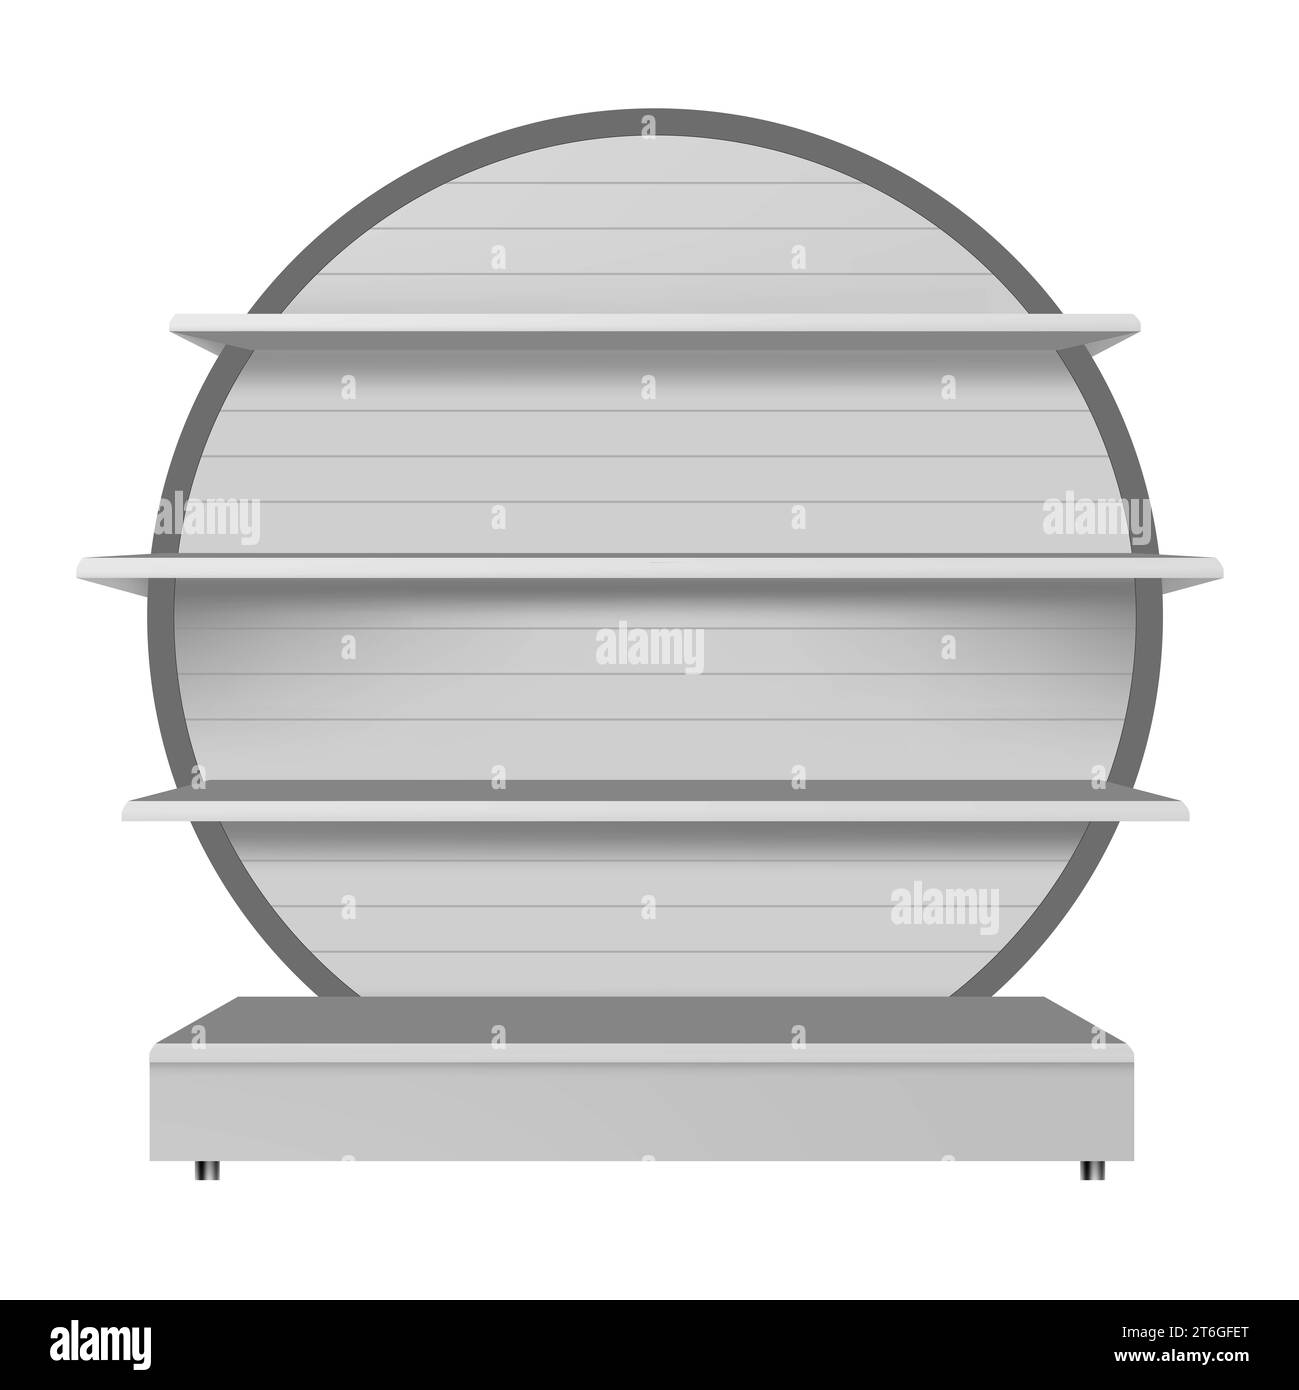 Gondola Shelf for Branding, Unique Round Gondola Stand, Empty Products Display Stand. #gondola #branding #supermarket #empty Stock Photo